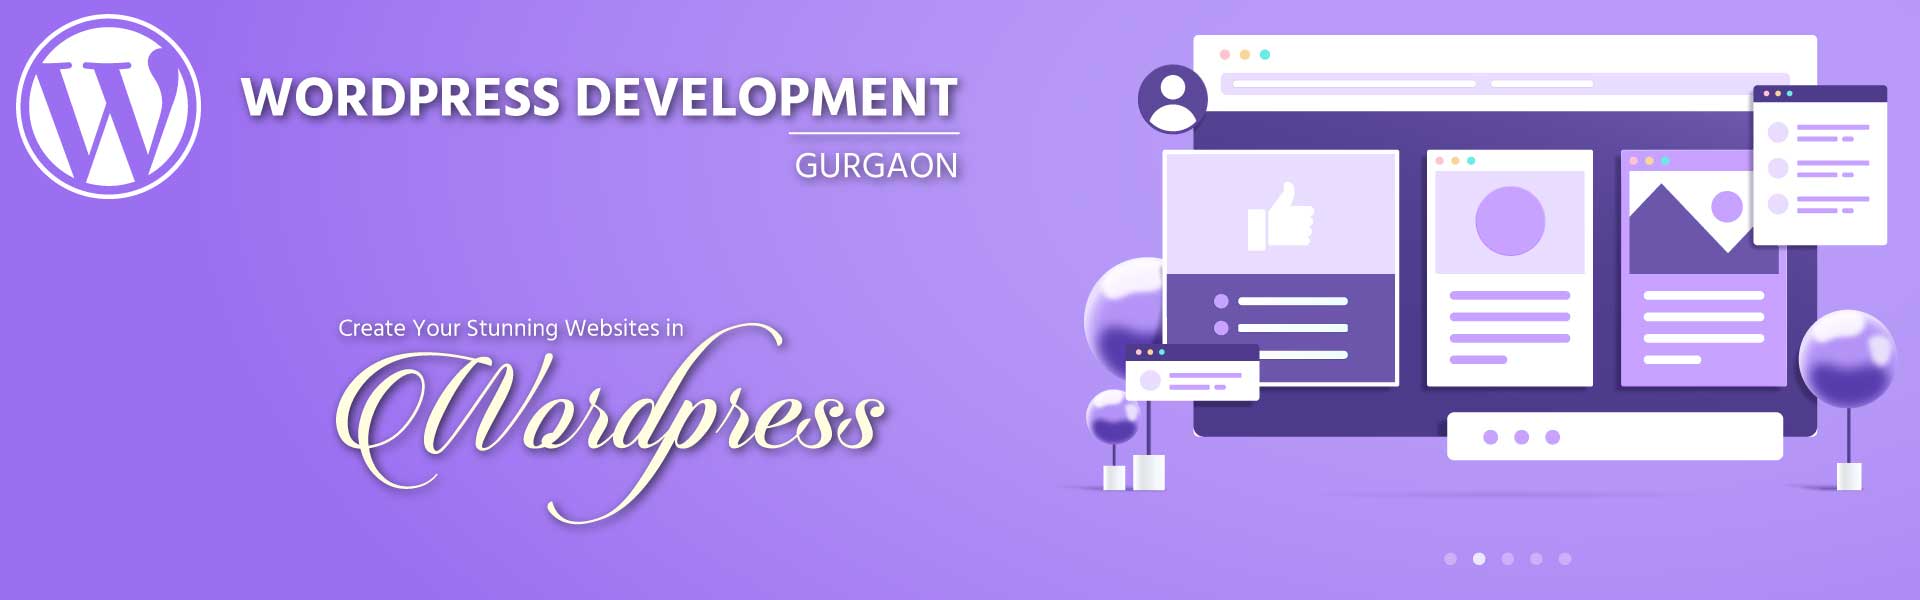 WordPress Development Company in Gurgaon